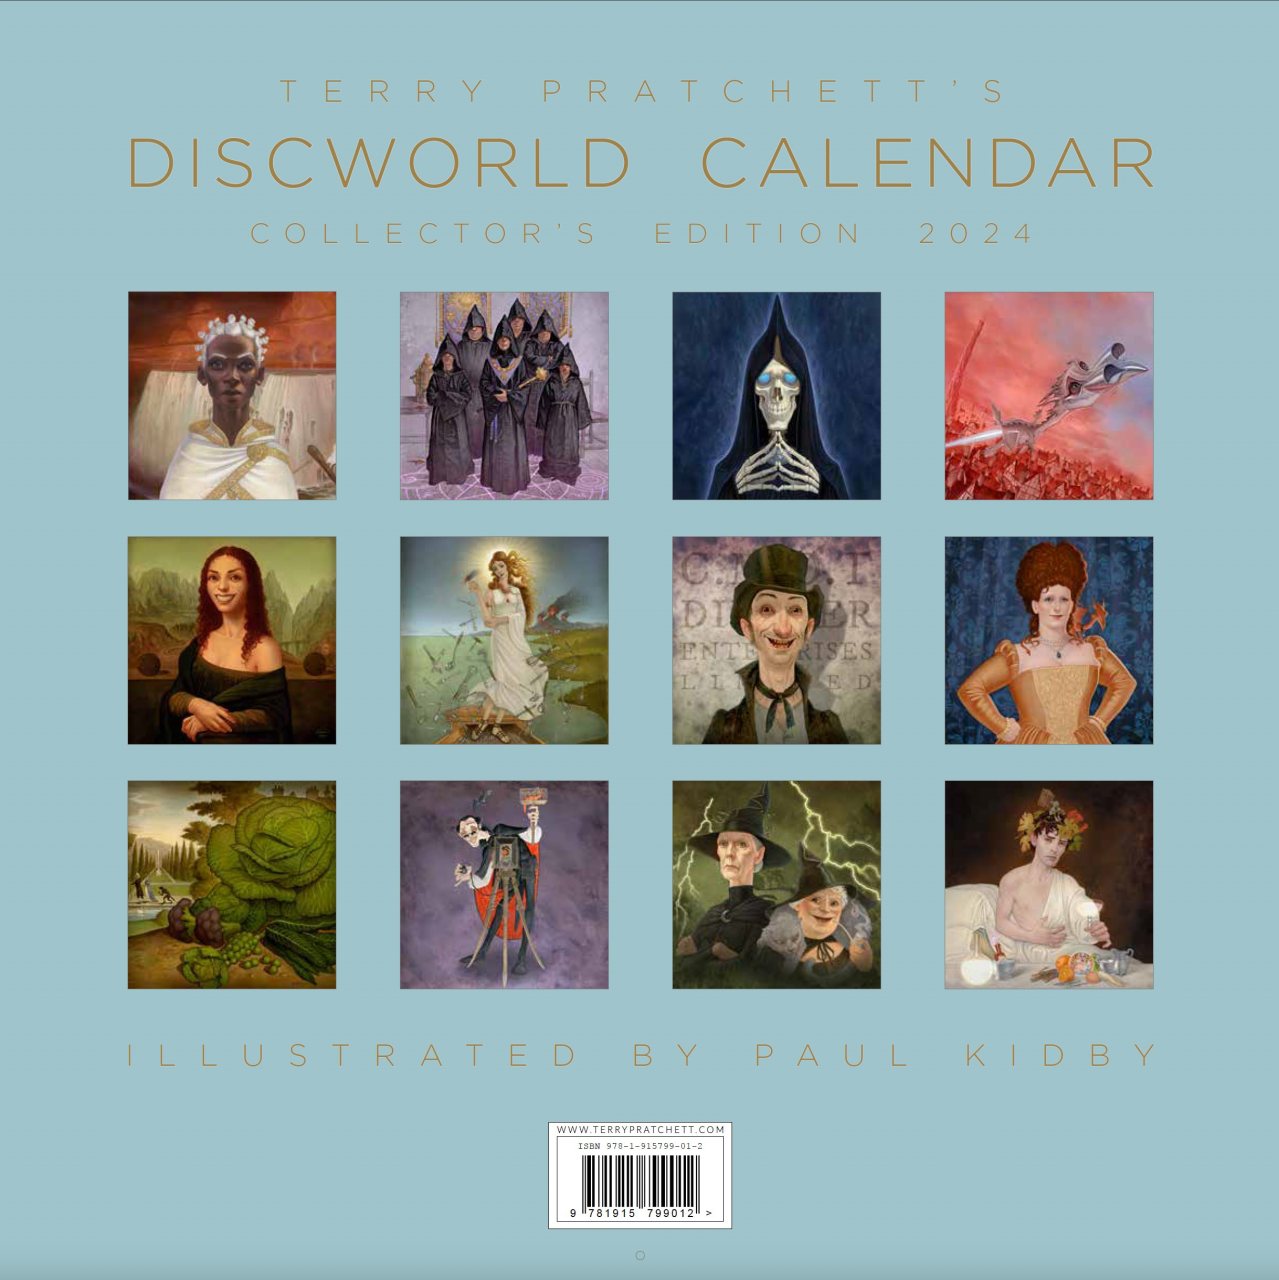 Terry Pratchett's Discworld Calendar 2024 by Paul Kidby Waterstones